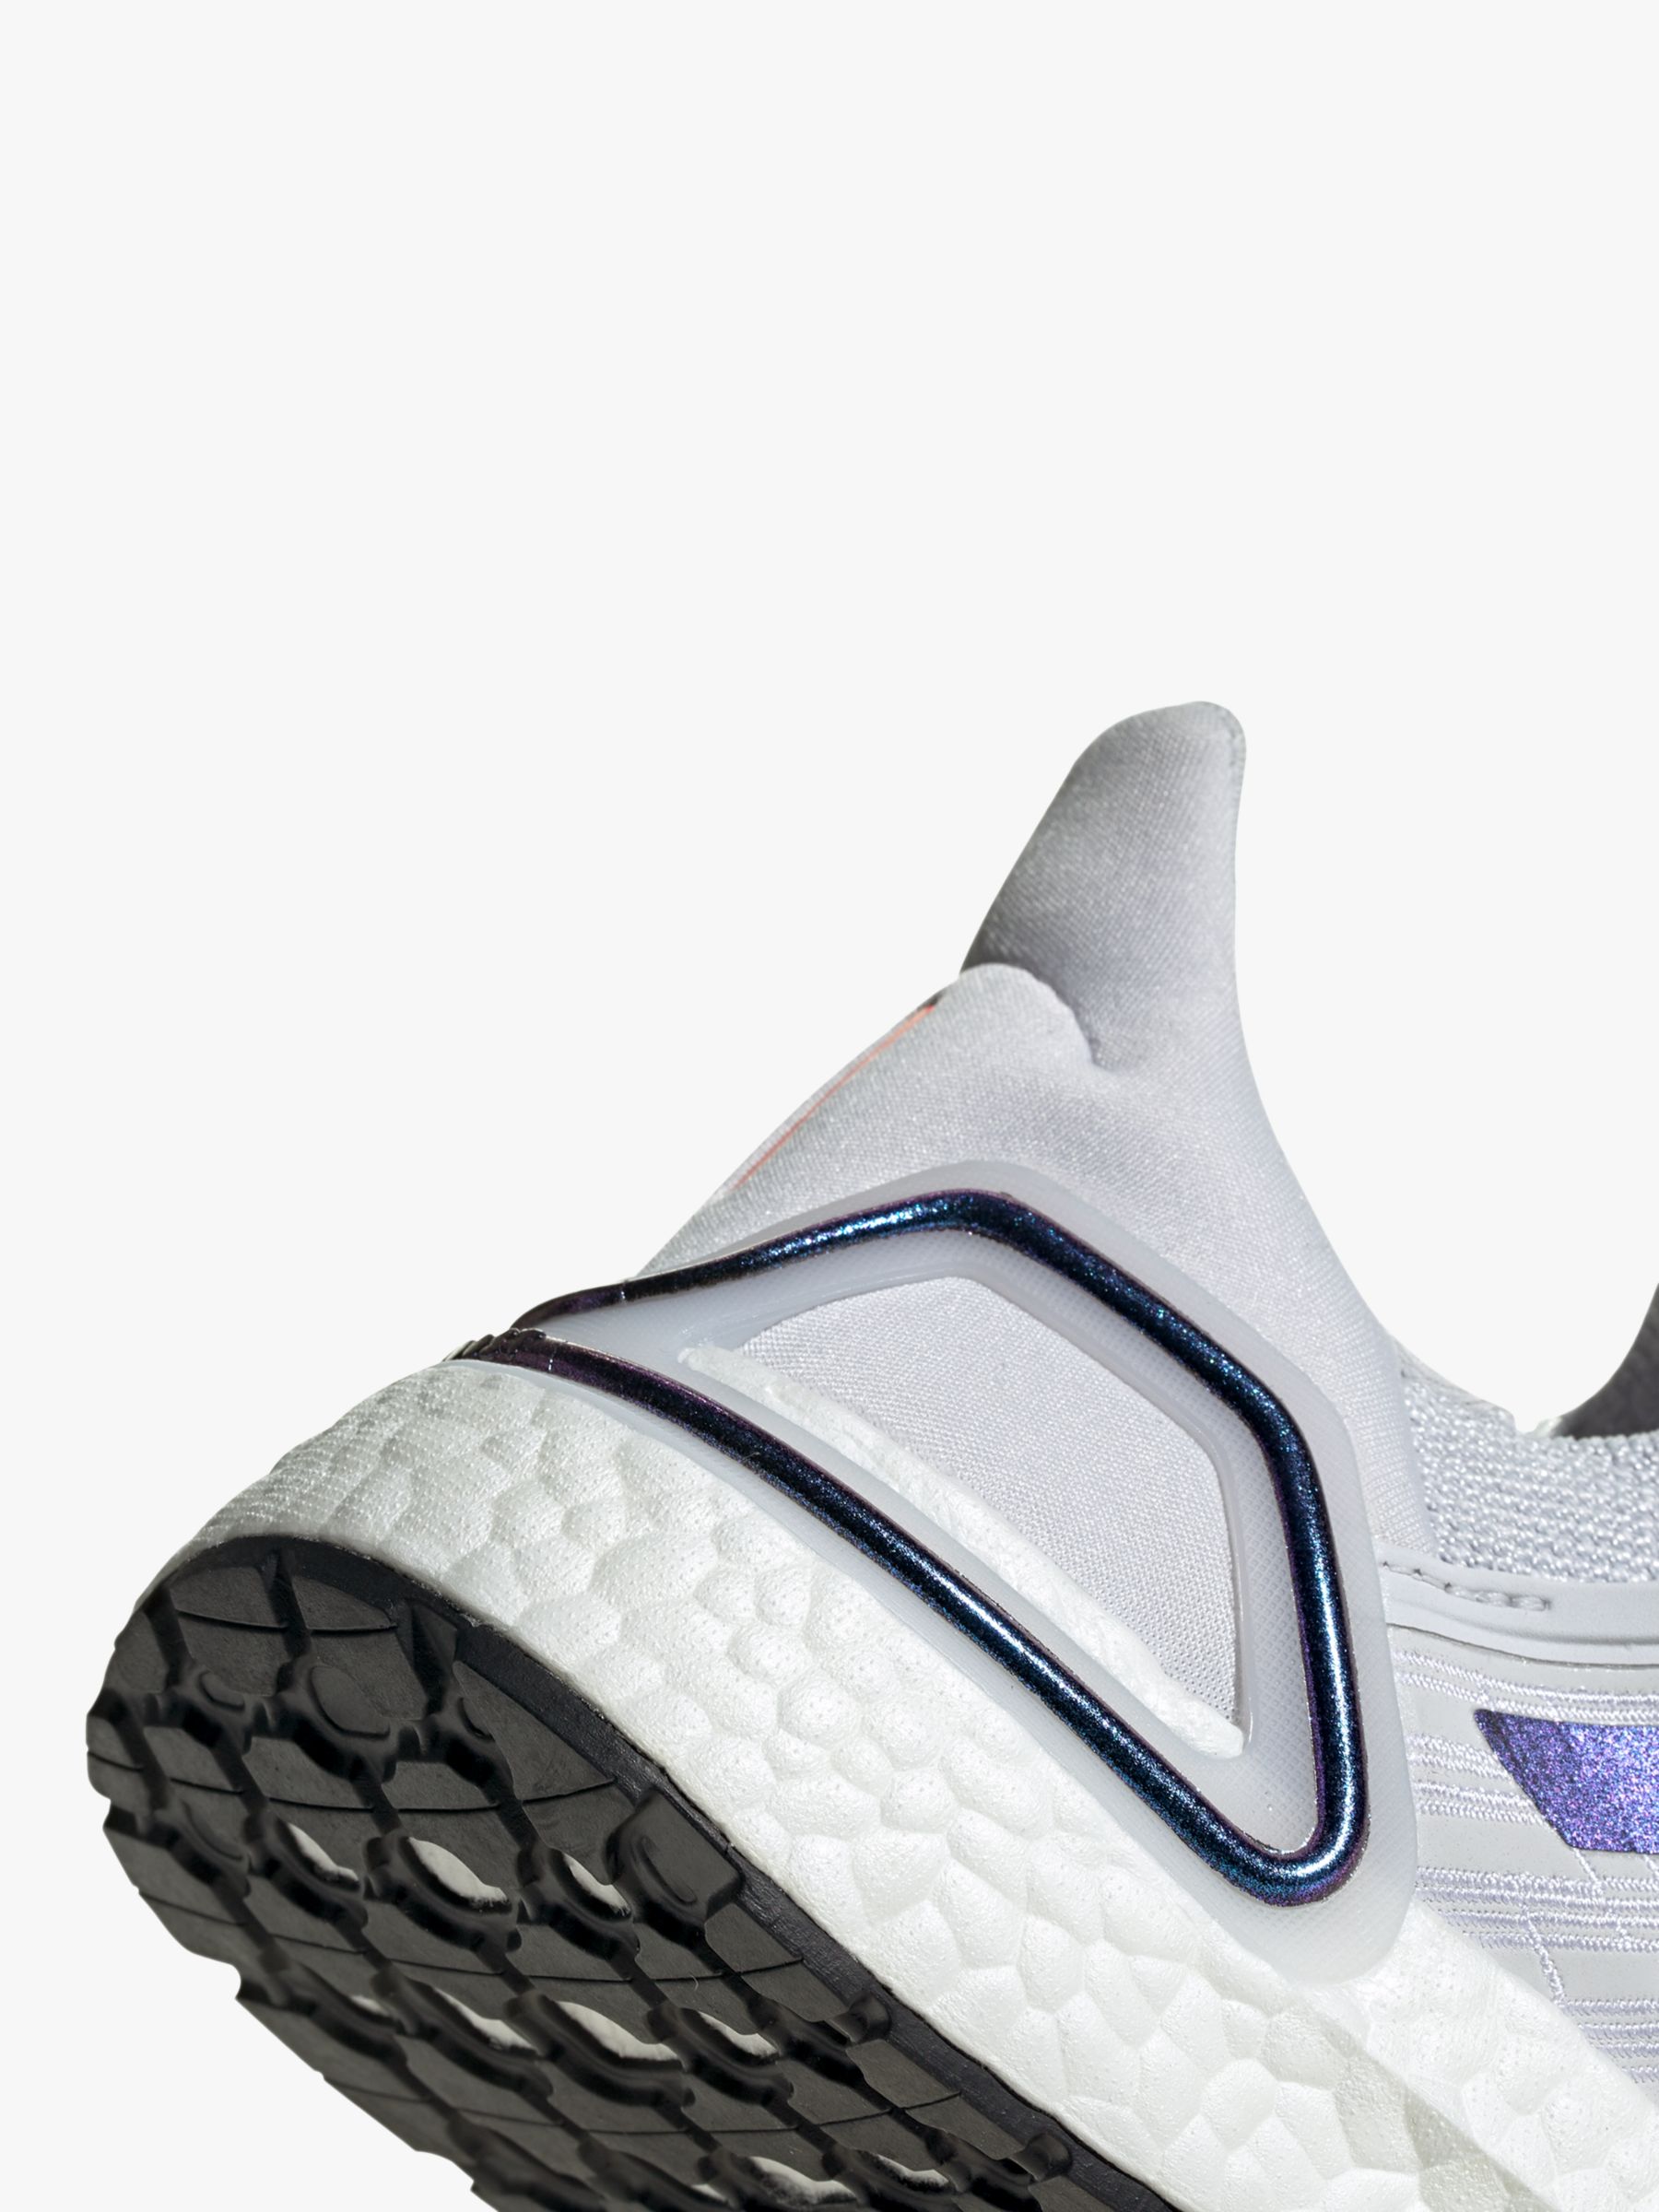 Adidas Ultraboost Women S Running Shoes Dash Grey Boost Blue Violet Met Core Black At John Lewis Partners